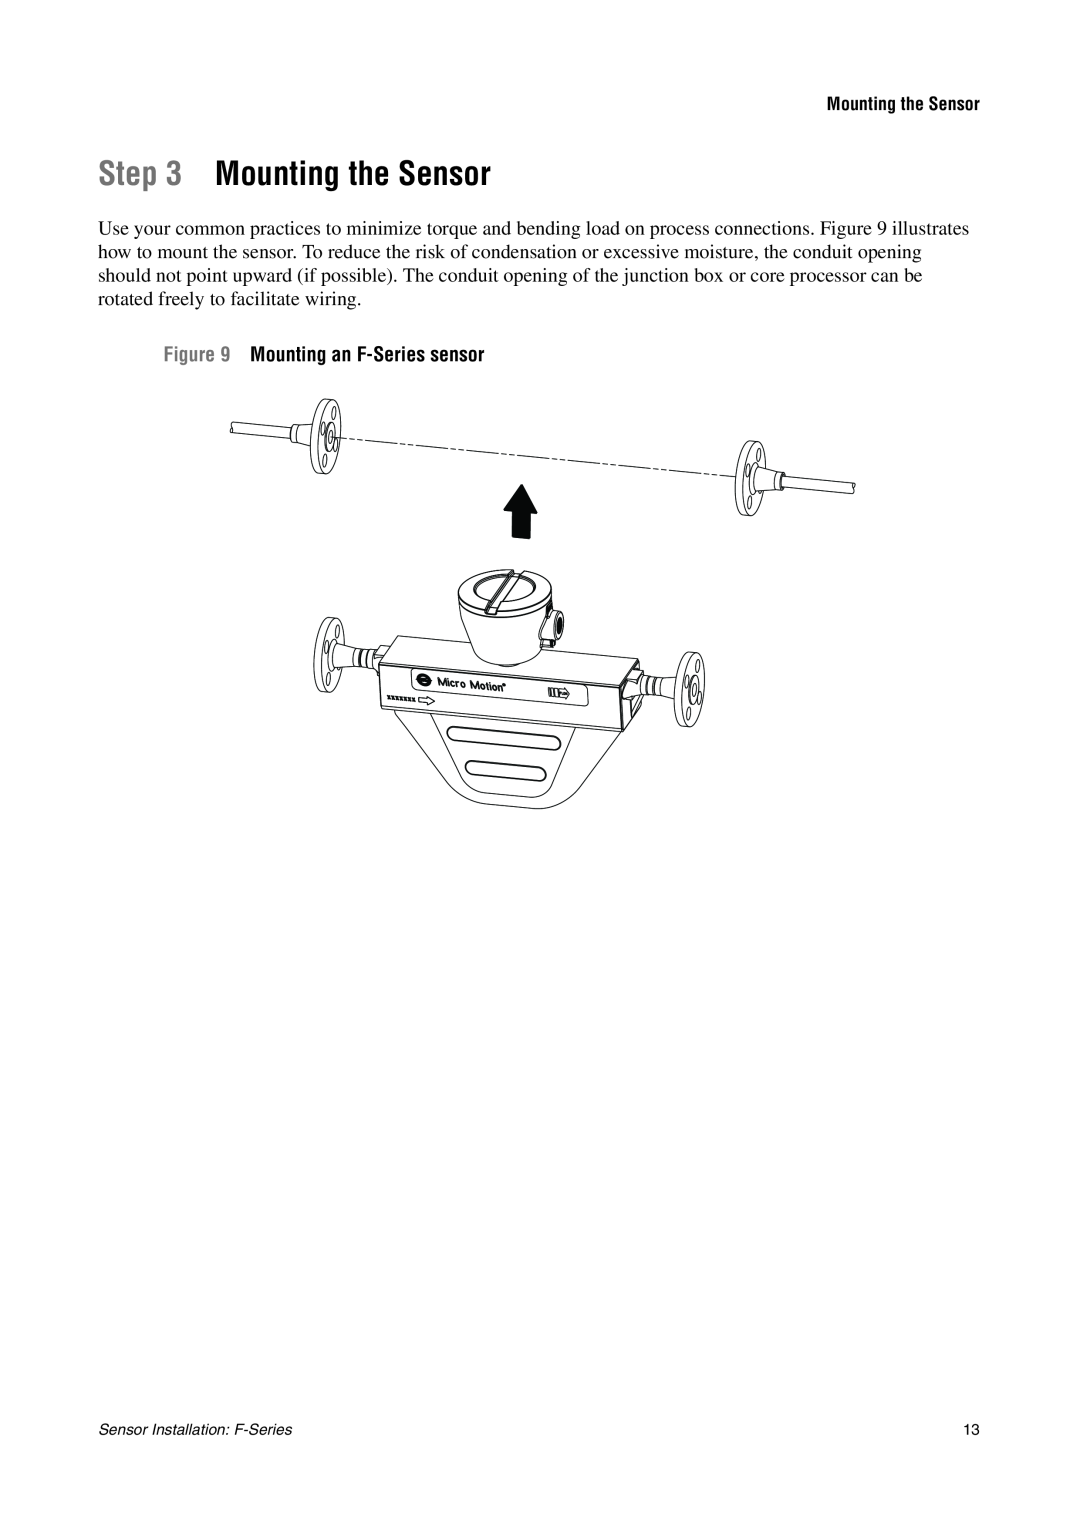 Emerson F-SERIES SENSOR installation manual Mounting the Sensor, Mounting an F-Seriessensor 